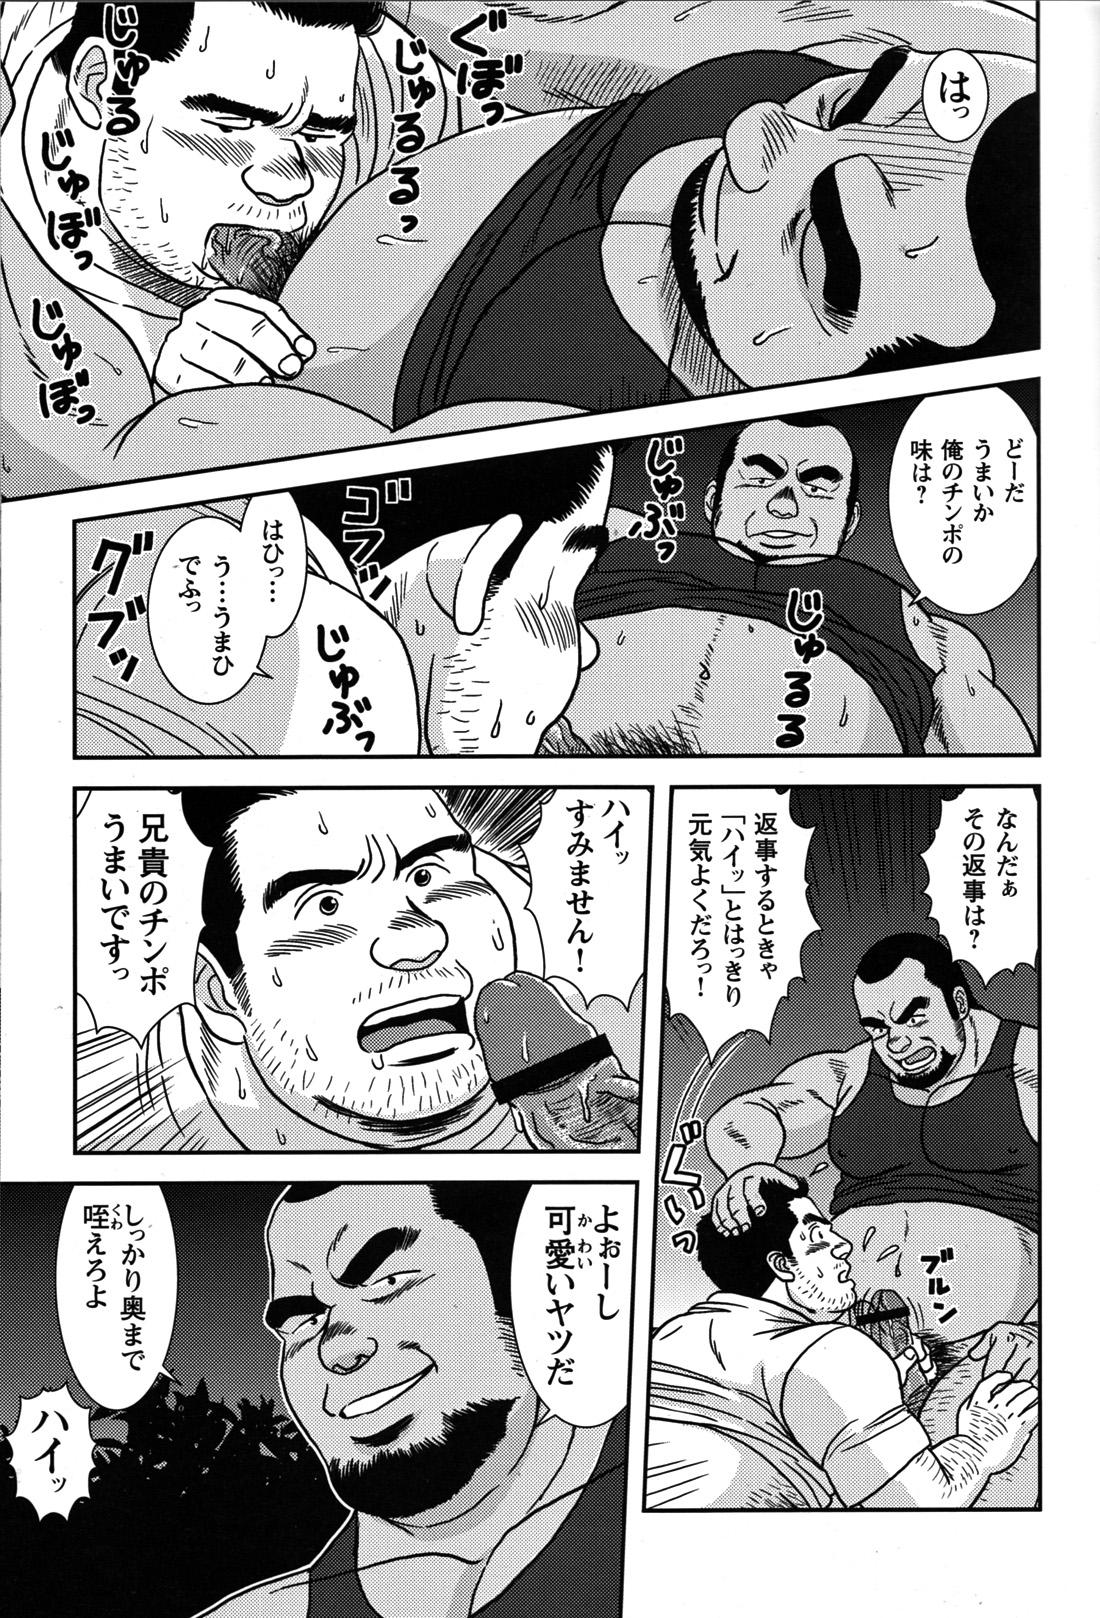 Comic G-men Gaho No.07 7